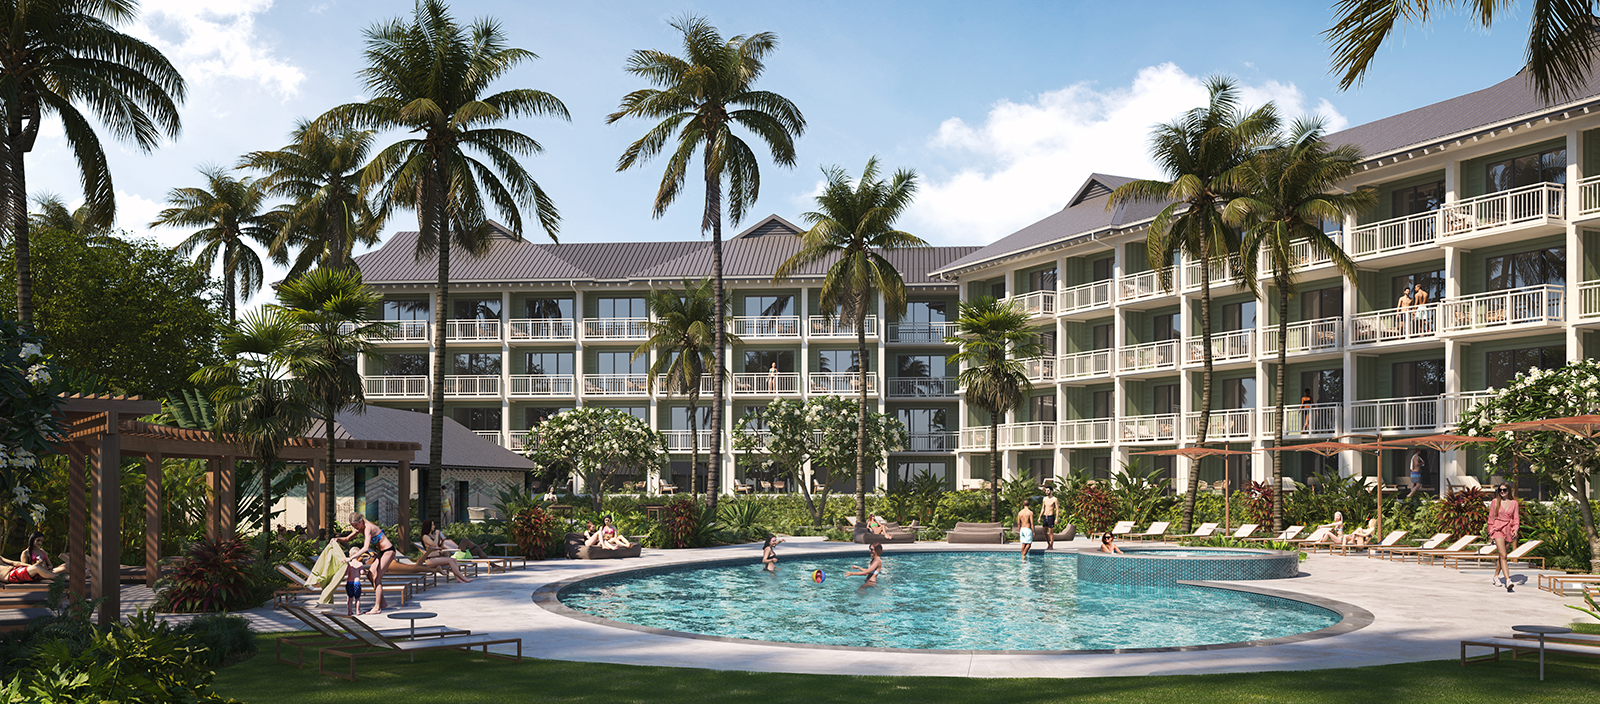 Civitas Capital Group Provides $150 Million Senior Construction Loan for Development of 210-room Resort in Hawaii